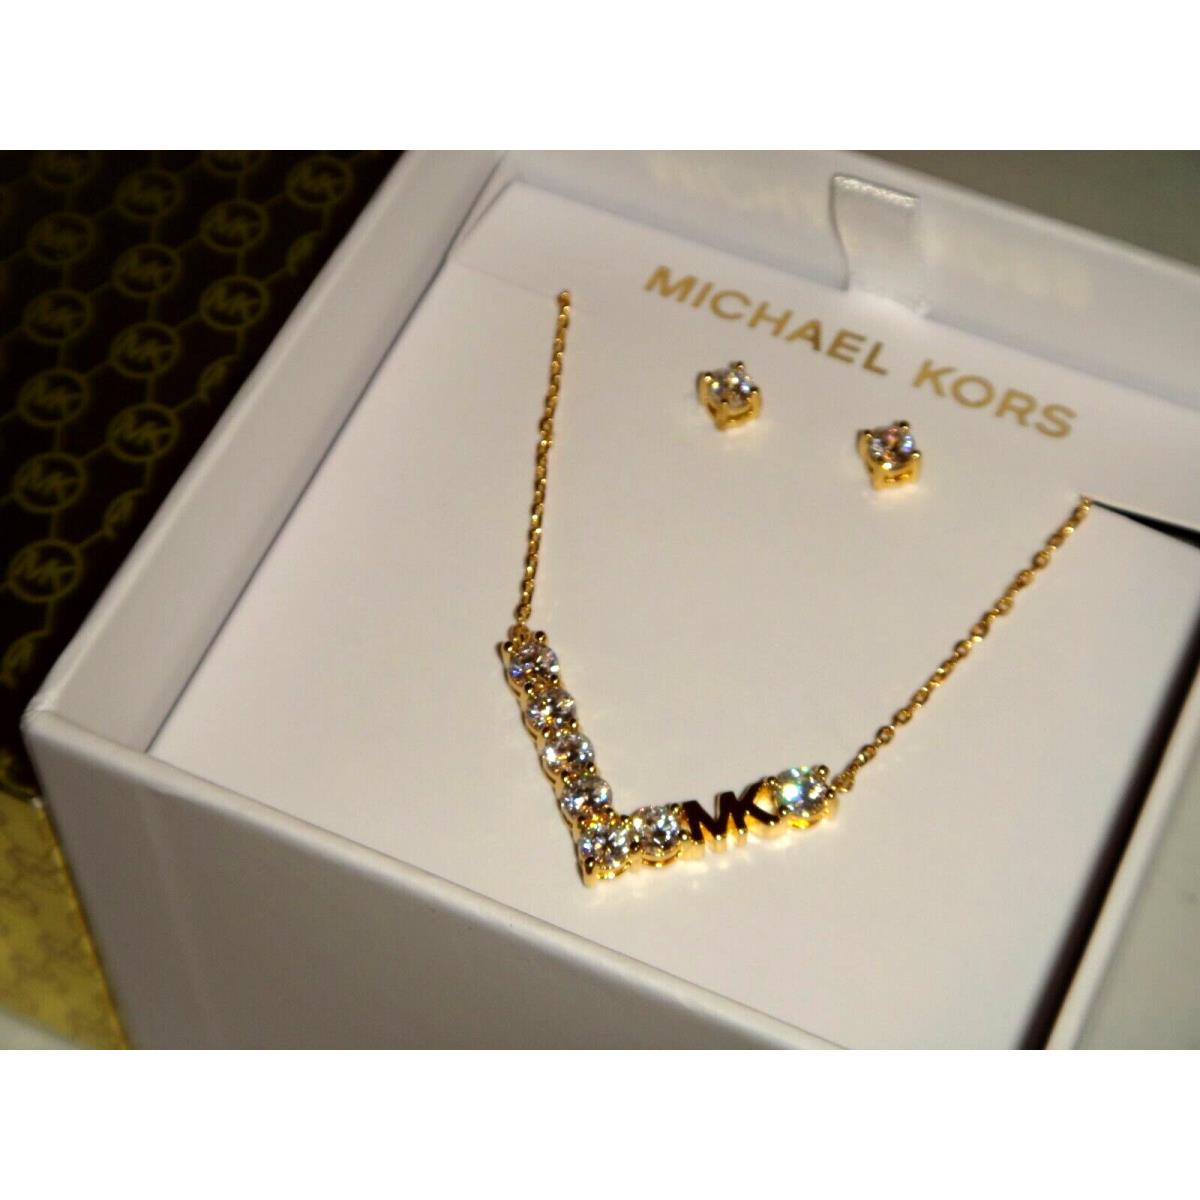 Michael Kors Gift Set Rose Gold Necklace Earrings MK Logo Crystals + MK Box